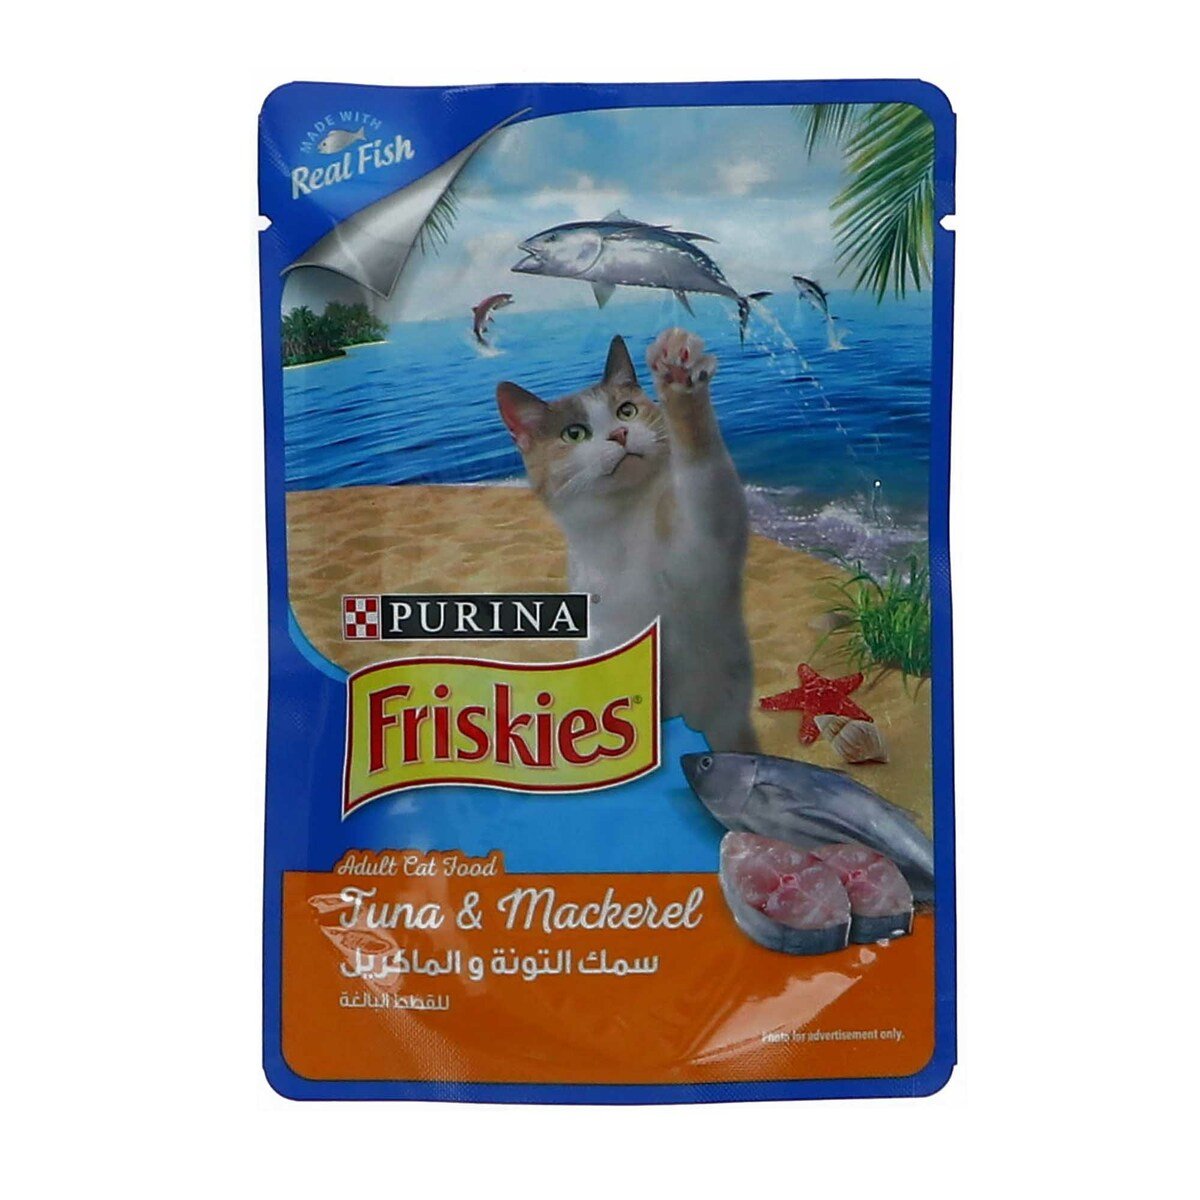 Purina Friskies Adult Catfood Tuna & Mackerel 80g